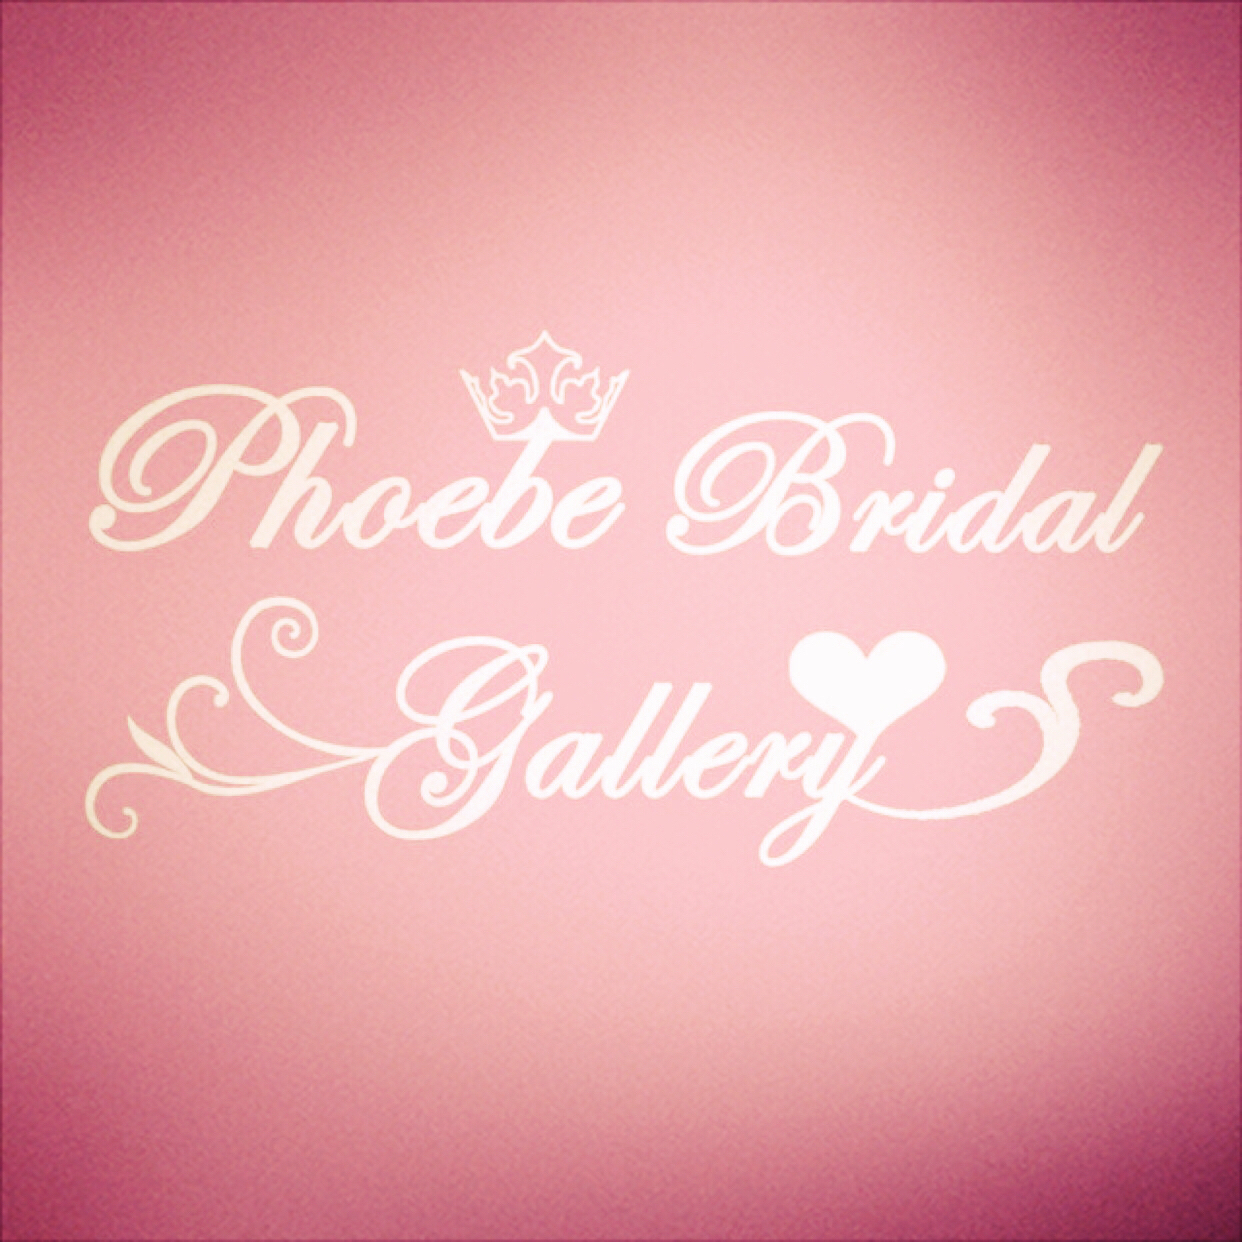 Phoebe Bridal全球高端婚纱租